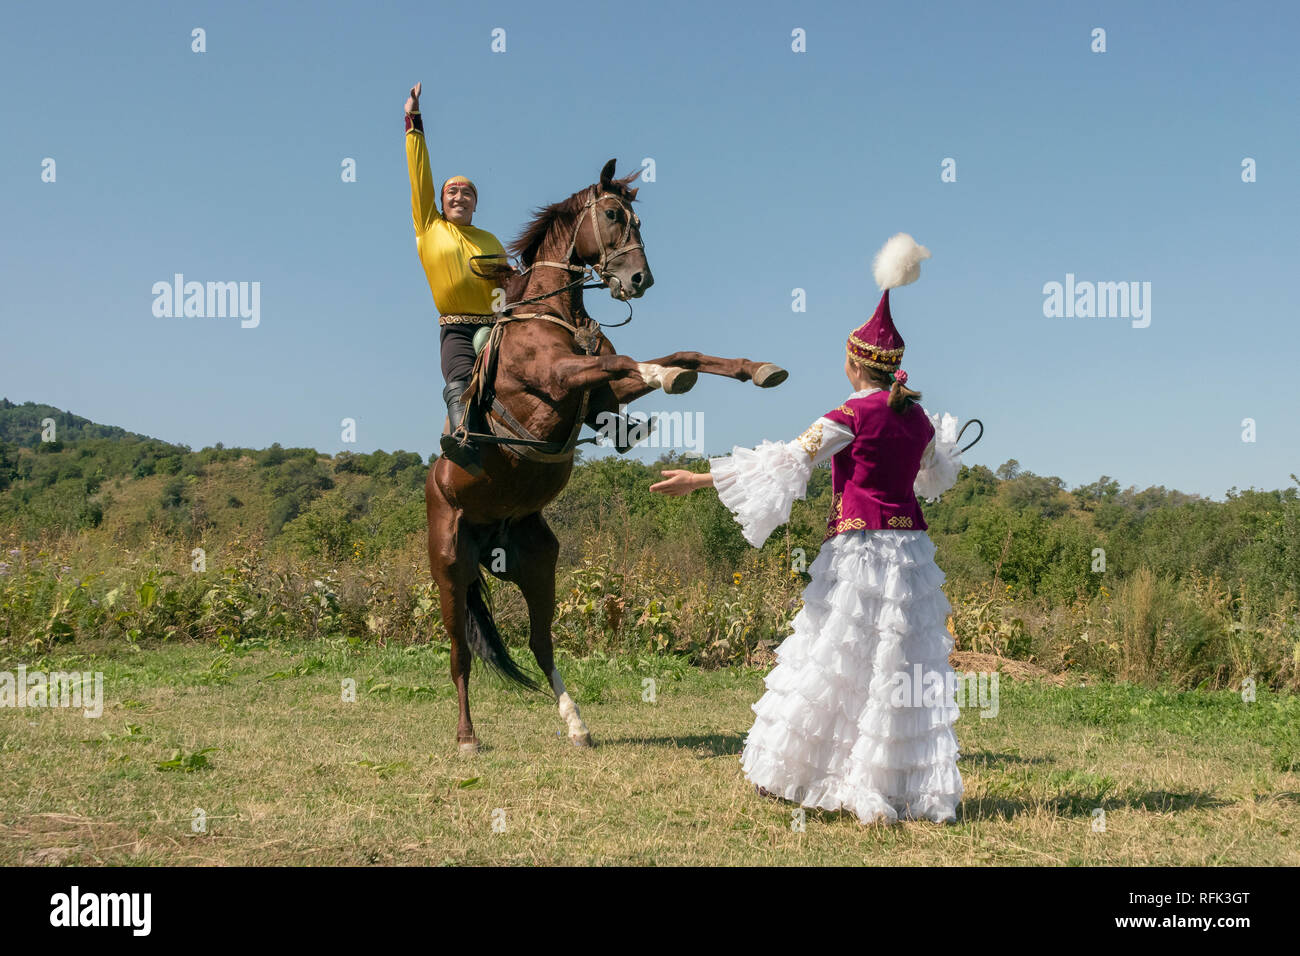 Rearing horse with Kazakh man on back, Almaty, Kazakhstan Stock Photo